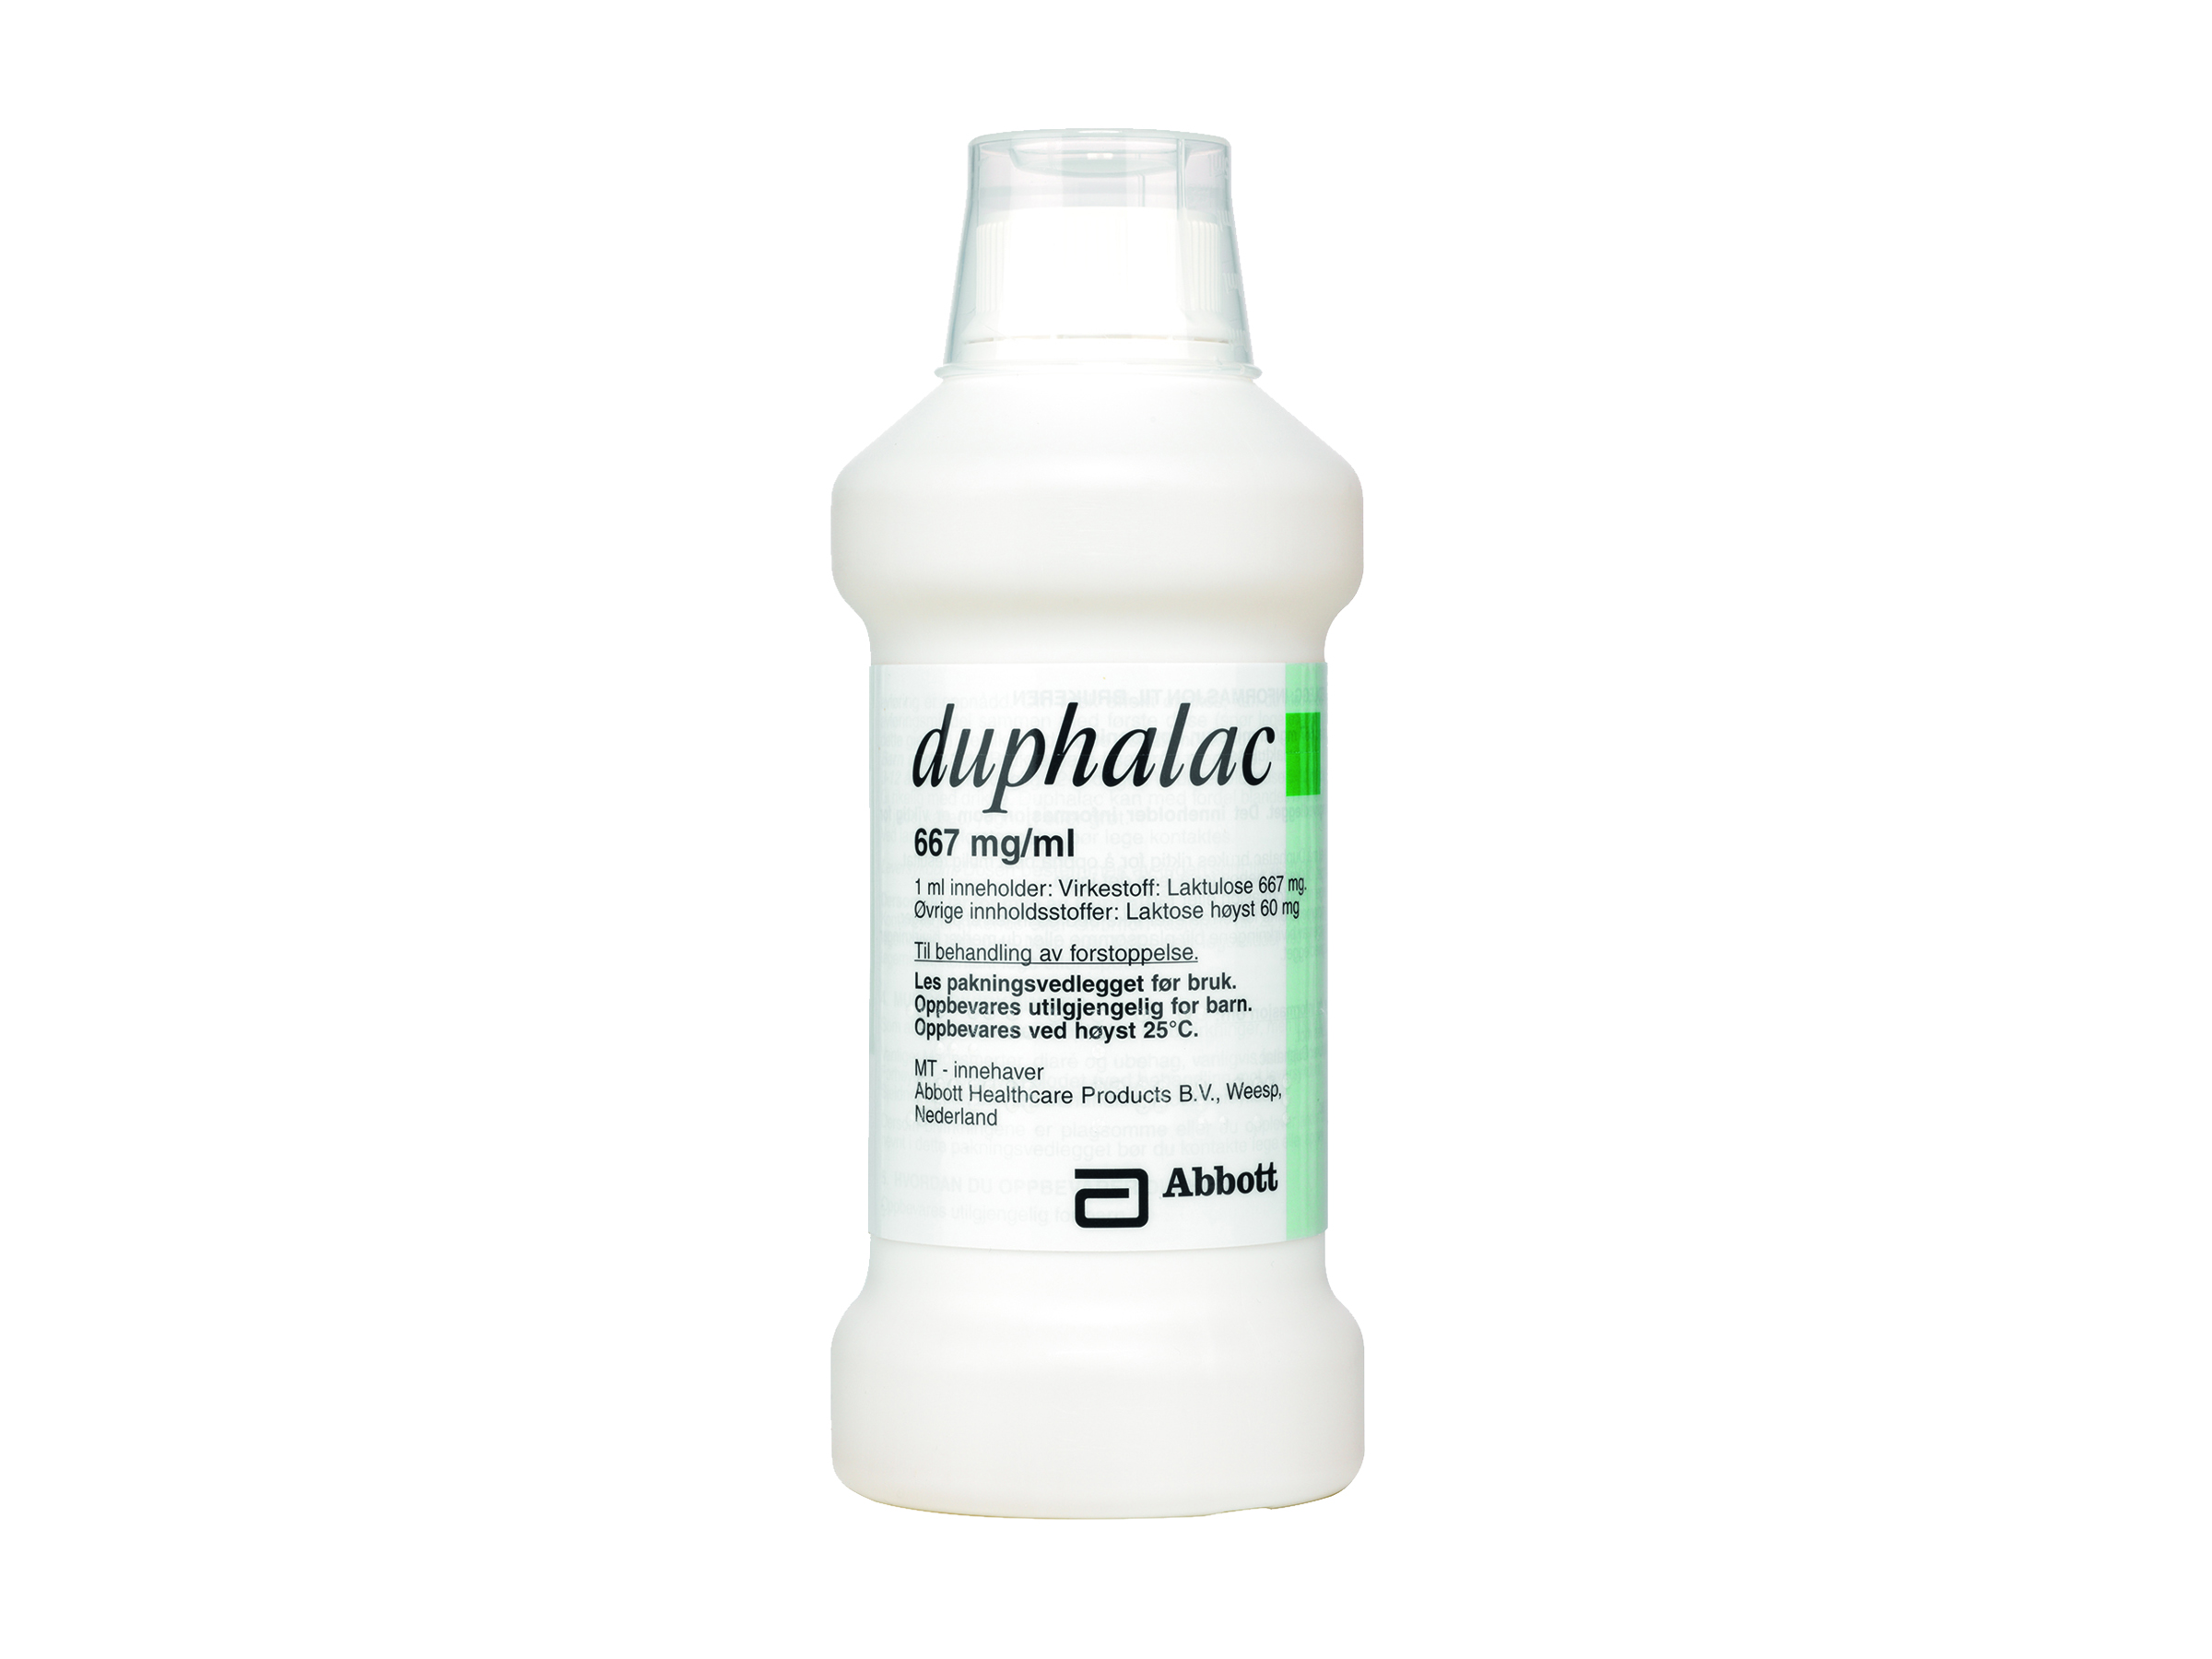 Duphalac Mikstur 667mg/ml, 500 ml